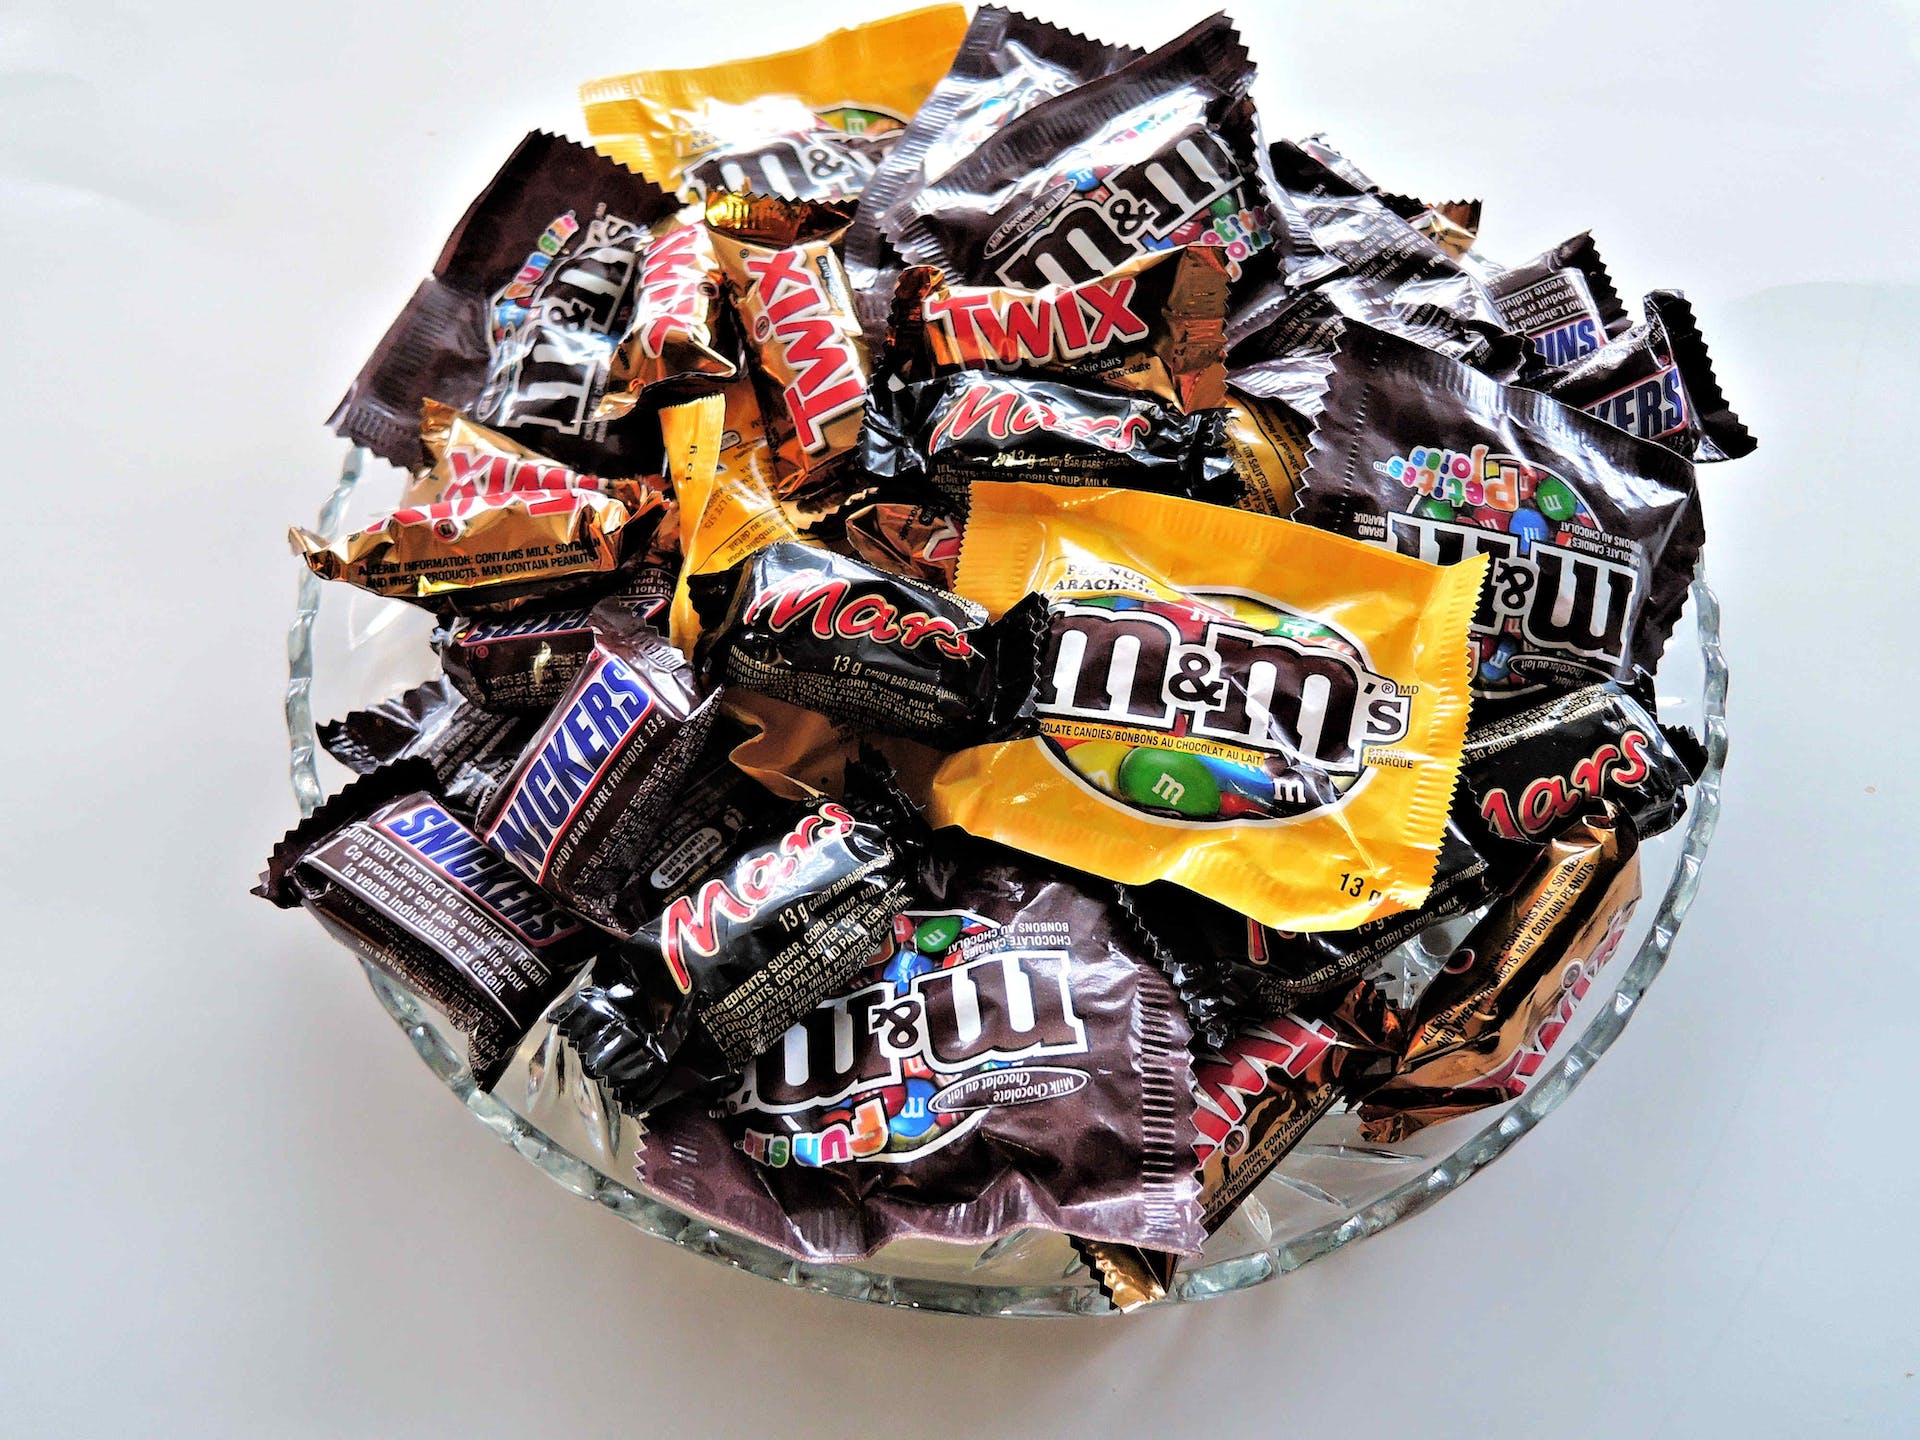 Glass bowl full of chocolate | Source: Pexels